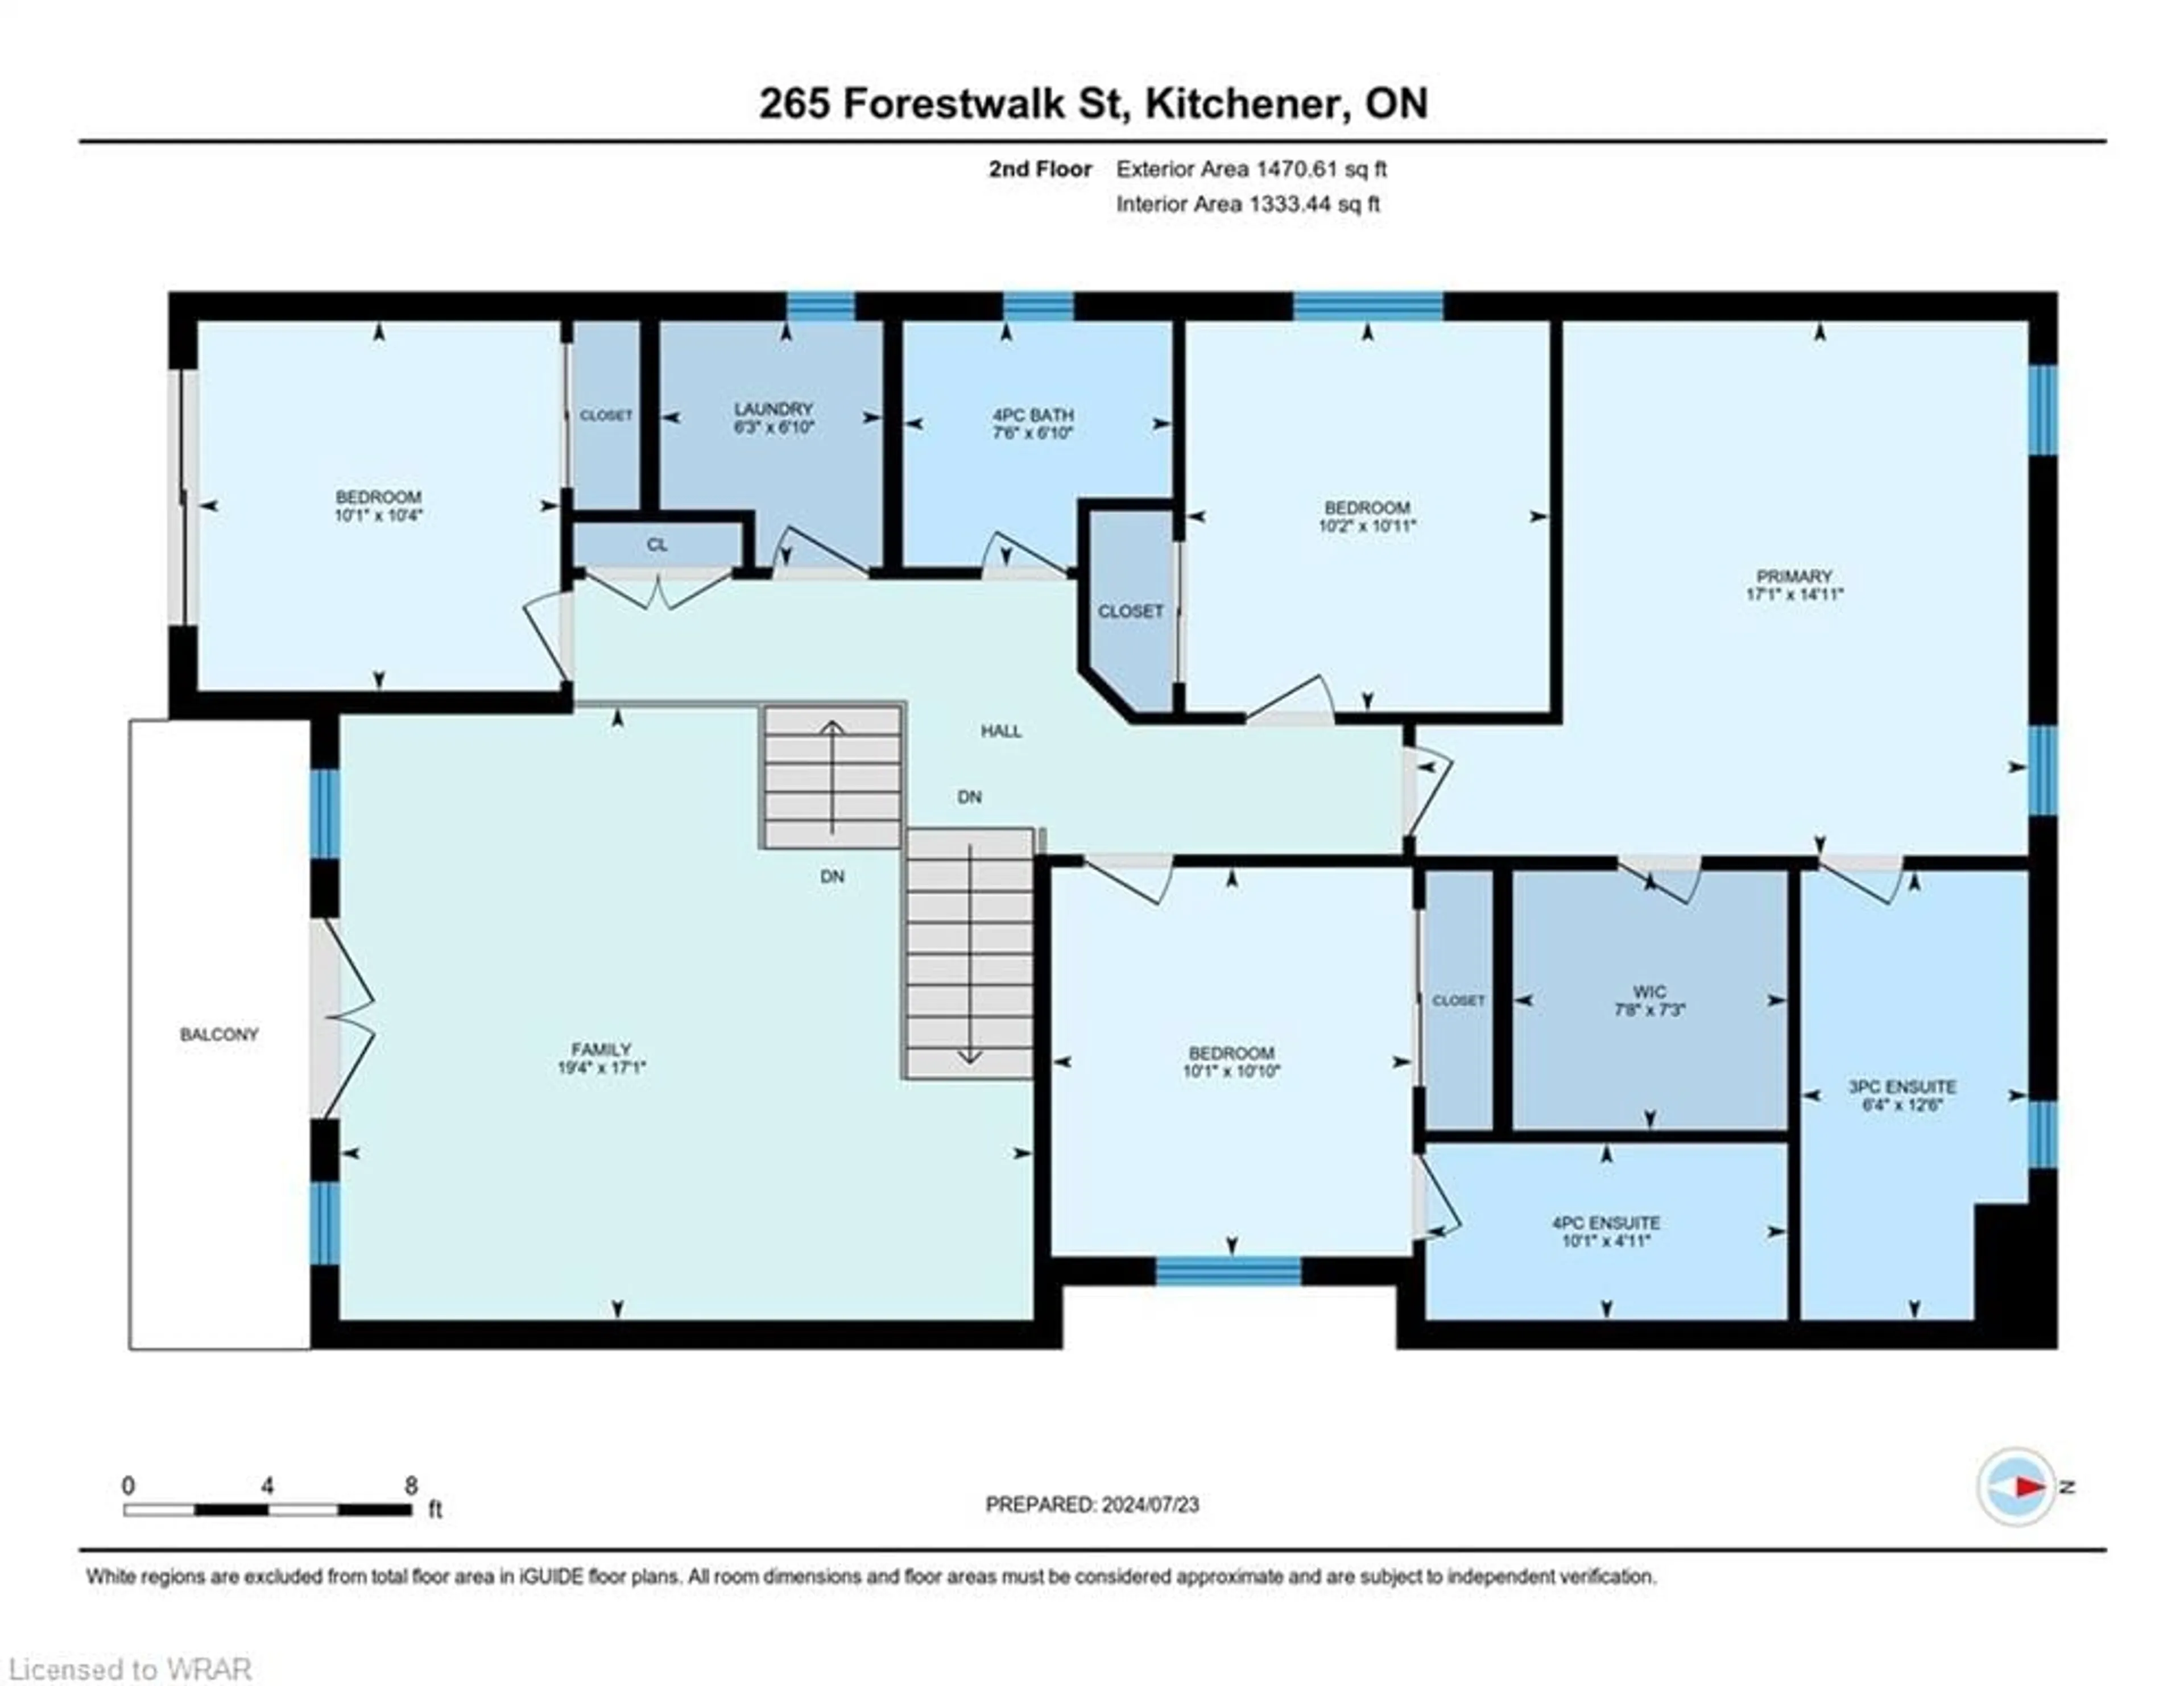 Floor plan for 265 Forestwalk St, Kitchener Ontario N2E 3Y2